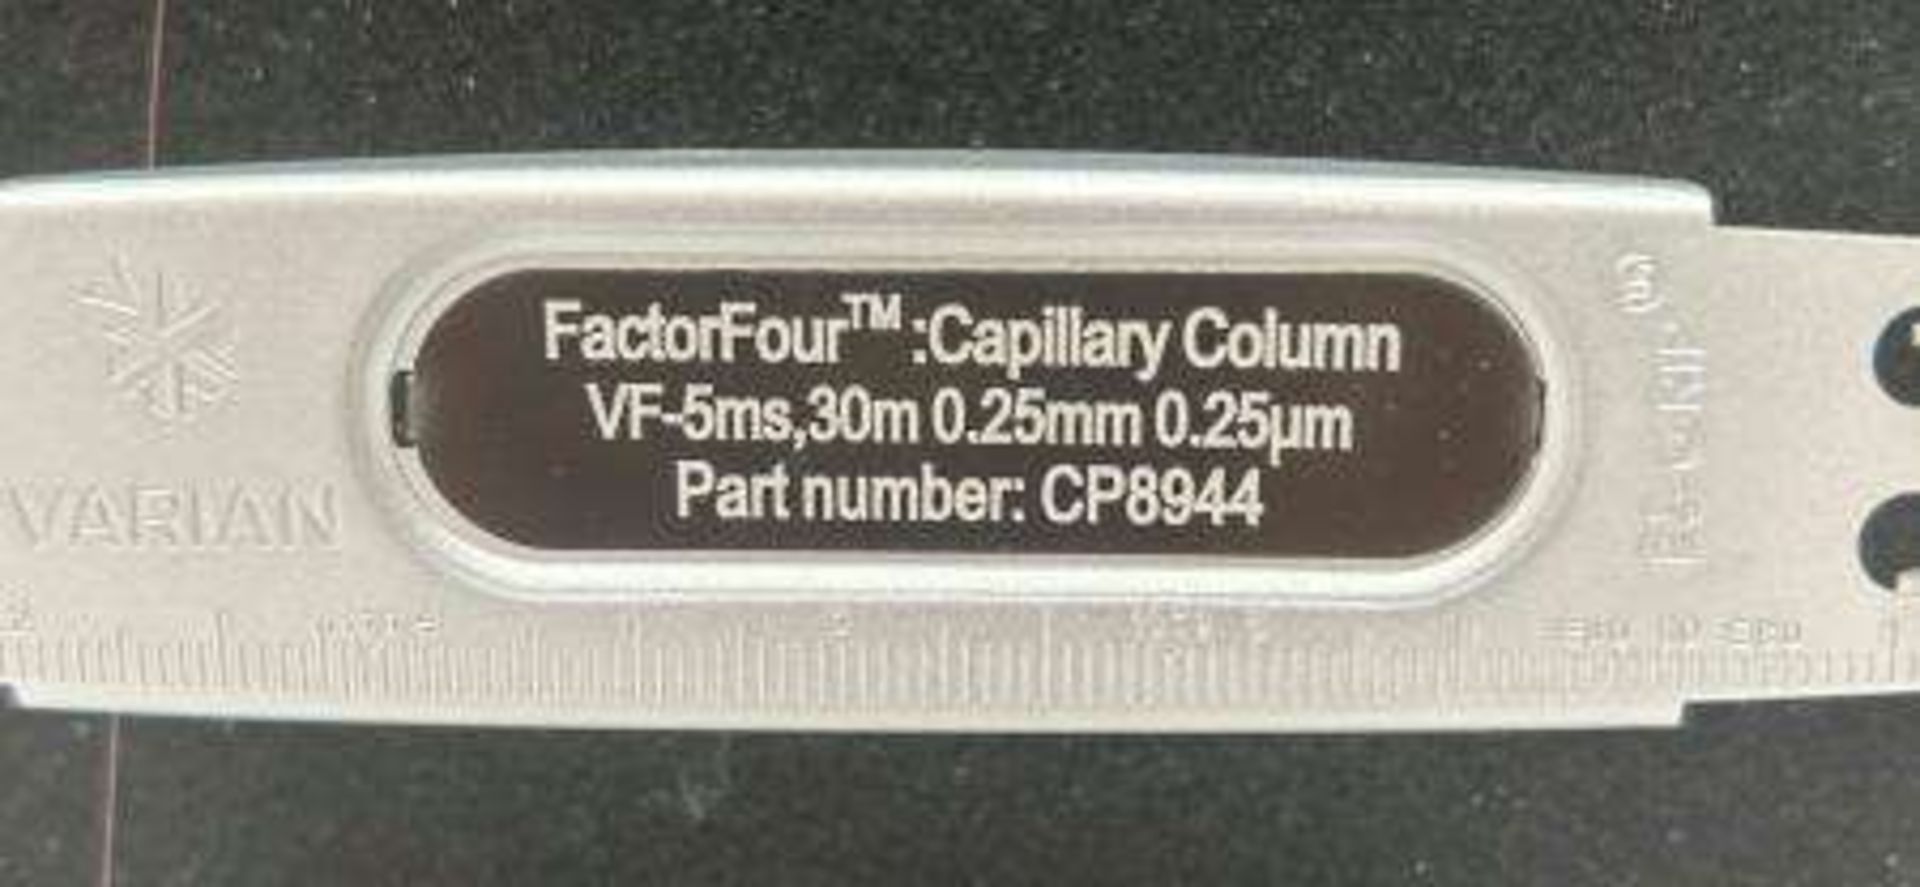 Varian Factor Four Capillary Column - Image 5 of 5